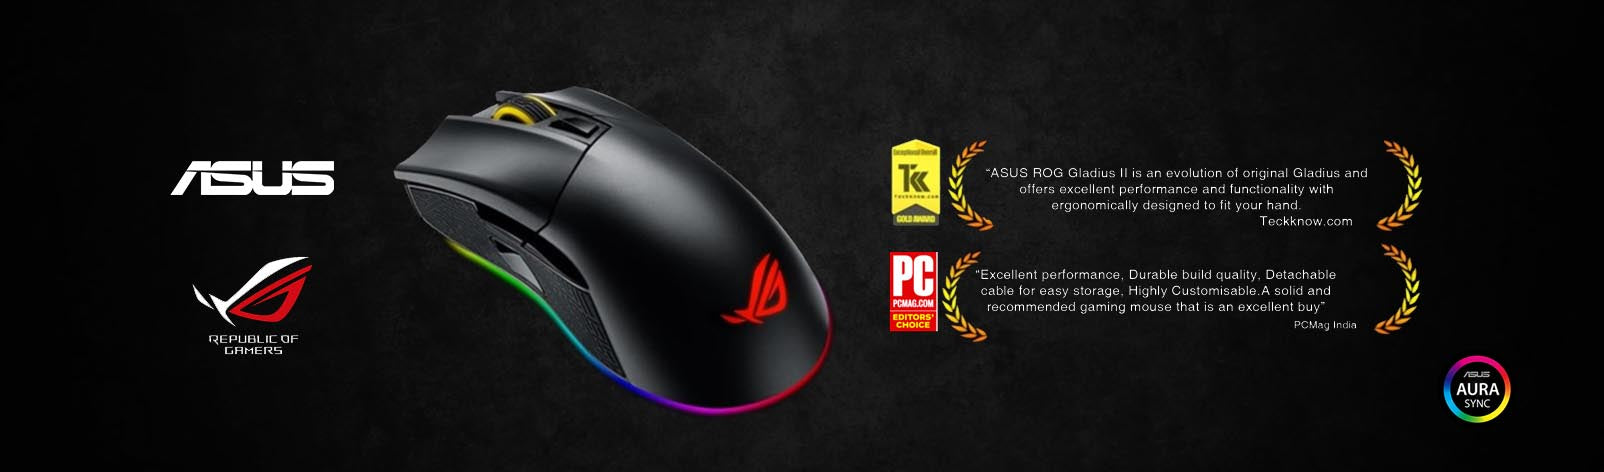 Asus Rog Gladius Ii Gaming Mouse With Aura Rgb Lighting Dpi Target B Tps Technologies